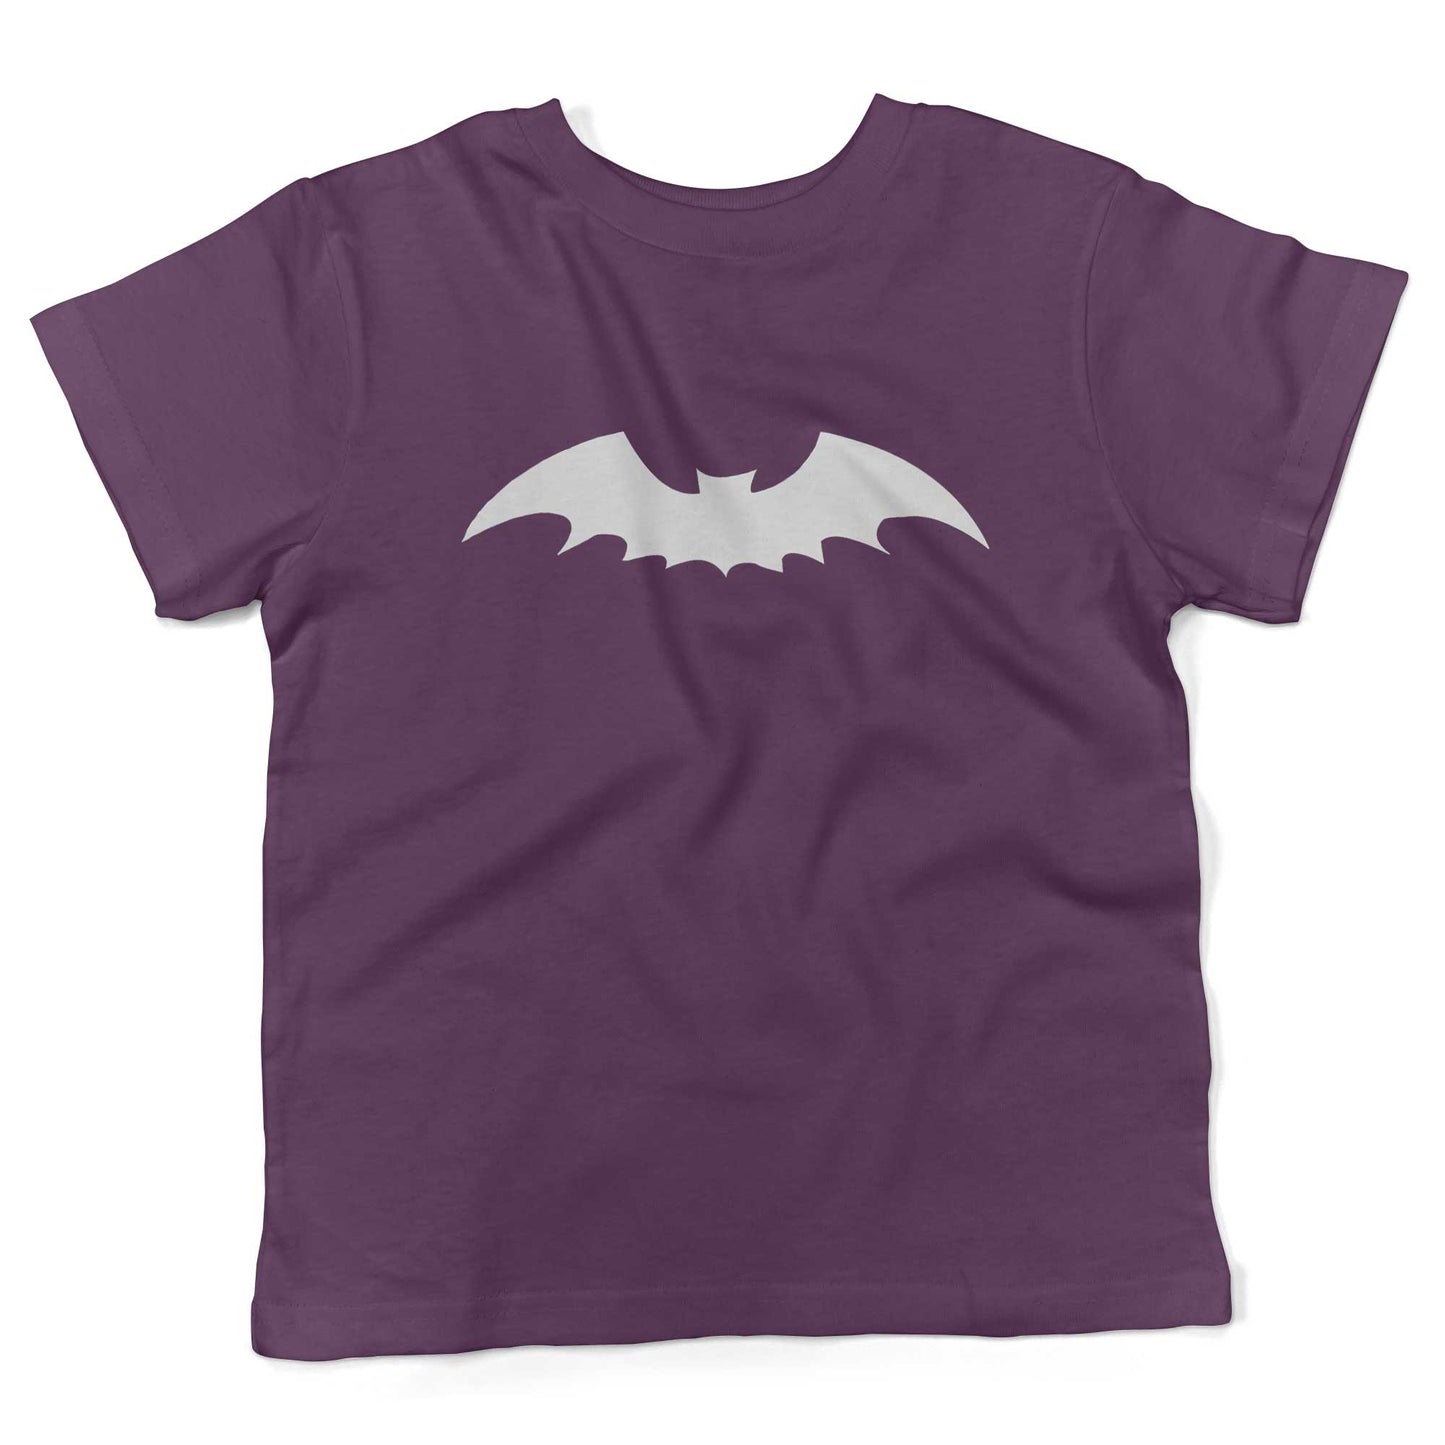 Gothic Bat Toddler Shirt-Organic Purple-2T